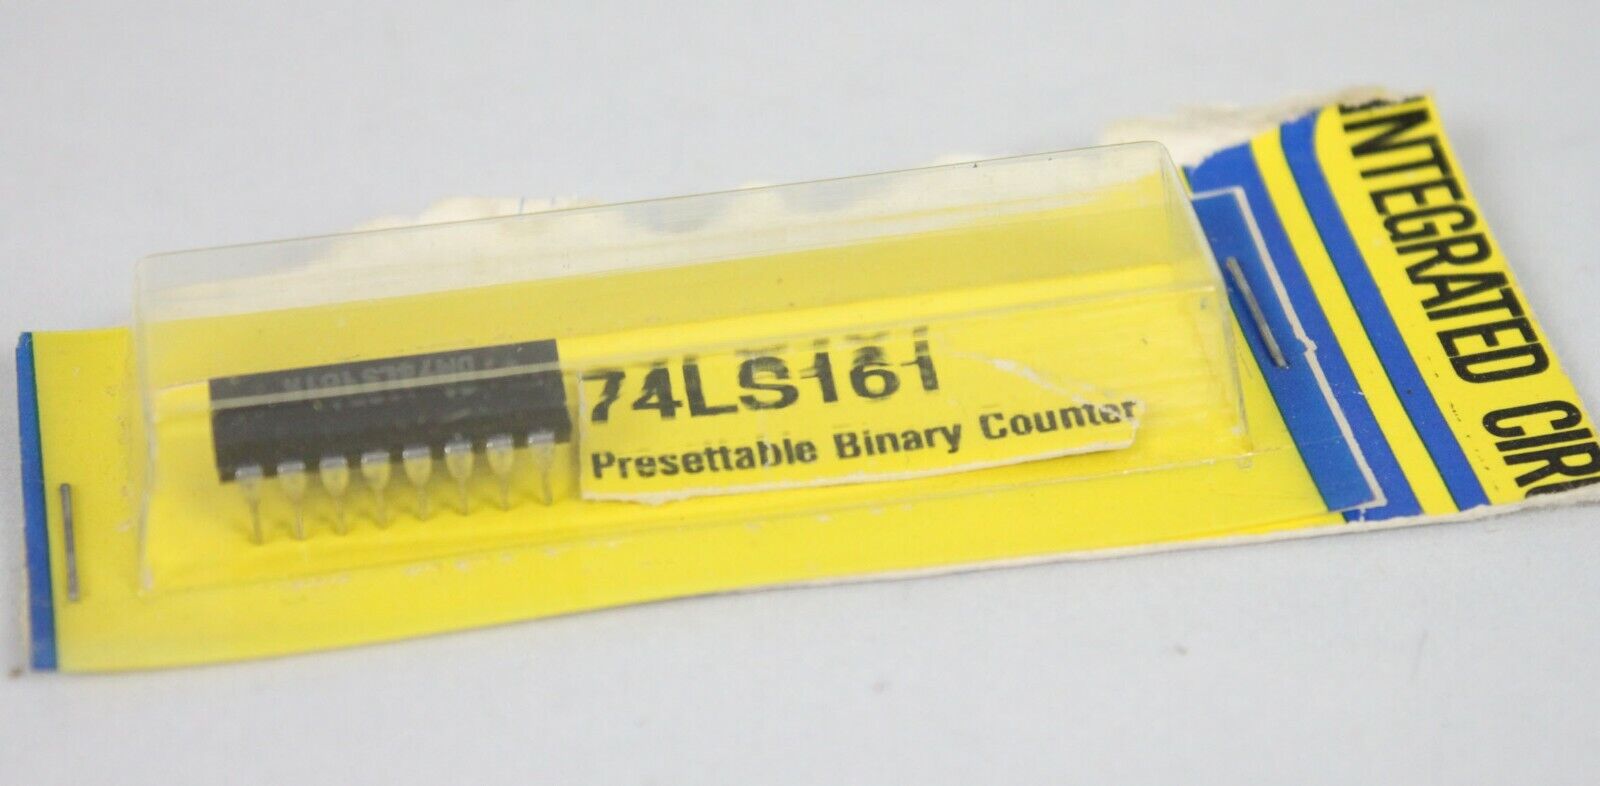 Integratged Circuit Presettable Binary Counter 74LS161 Chip Board Vtg Arcade 